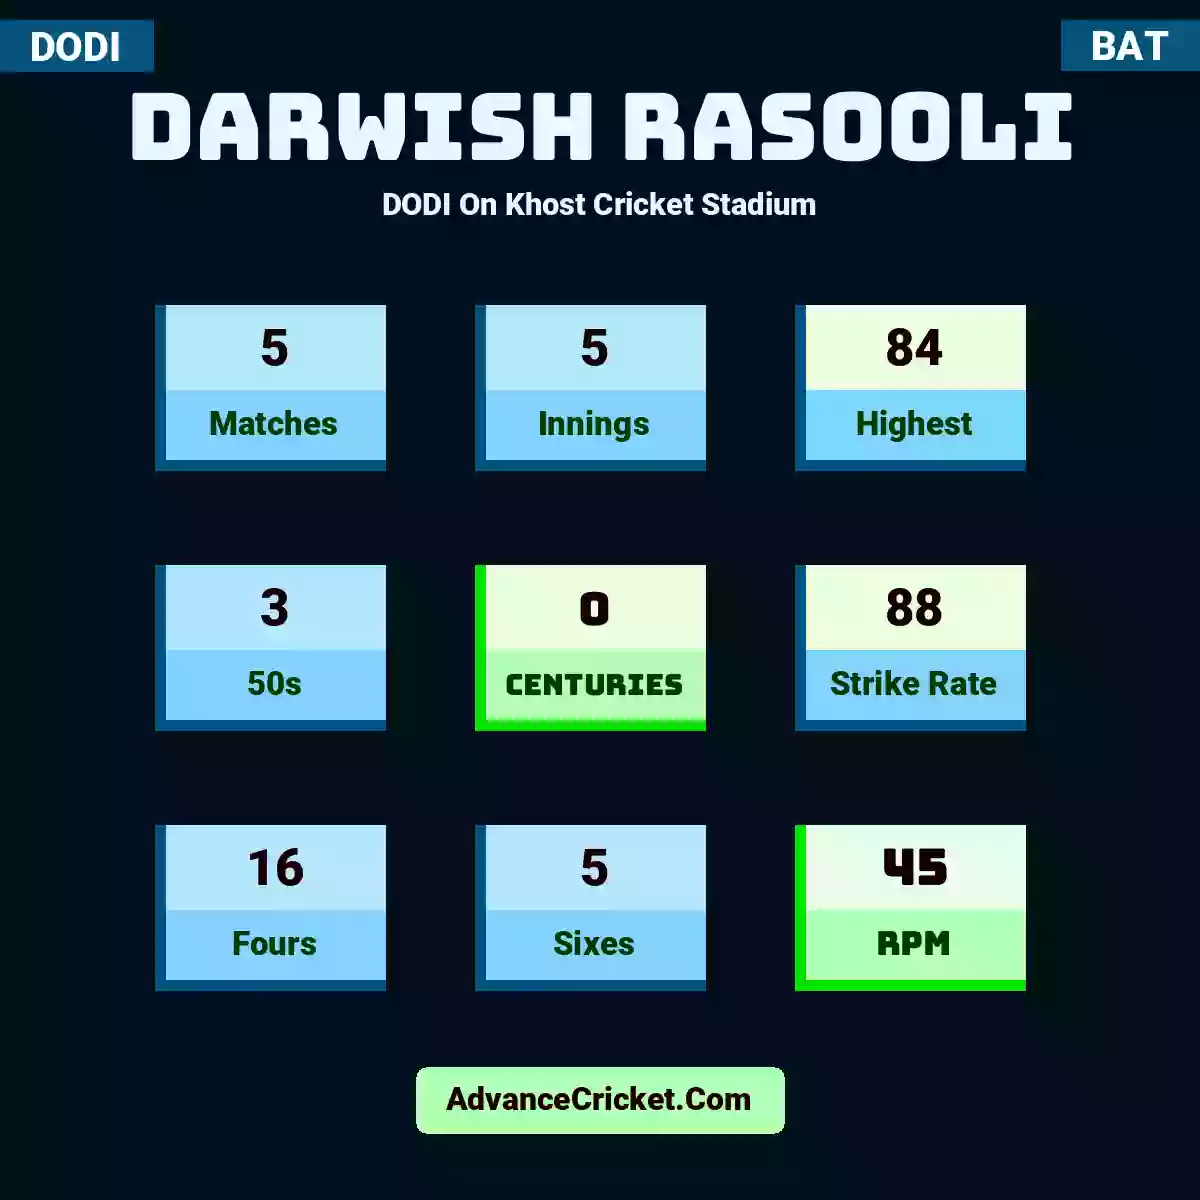 Darwish Rasooli DODI  On Khost Cricket Stadium, Darwish Rasooli played 5 matches, scored 84 runs as highest, 3 half-centuries, and 0 centuries, with a strike rate of 88. D.Rasooli hit 16 fours and 5 sixes, with an RPM of 45.